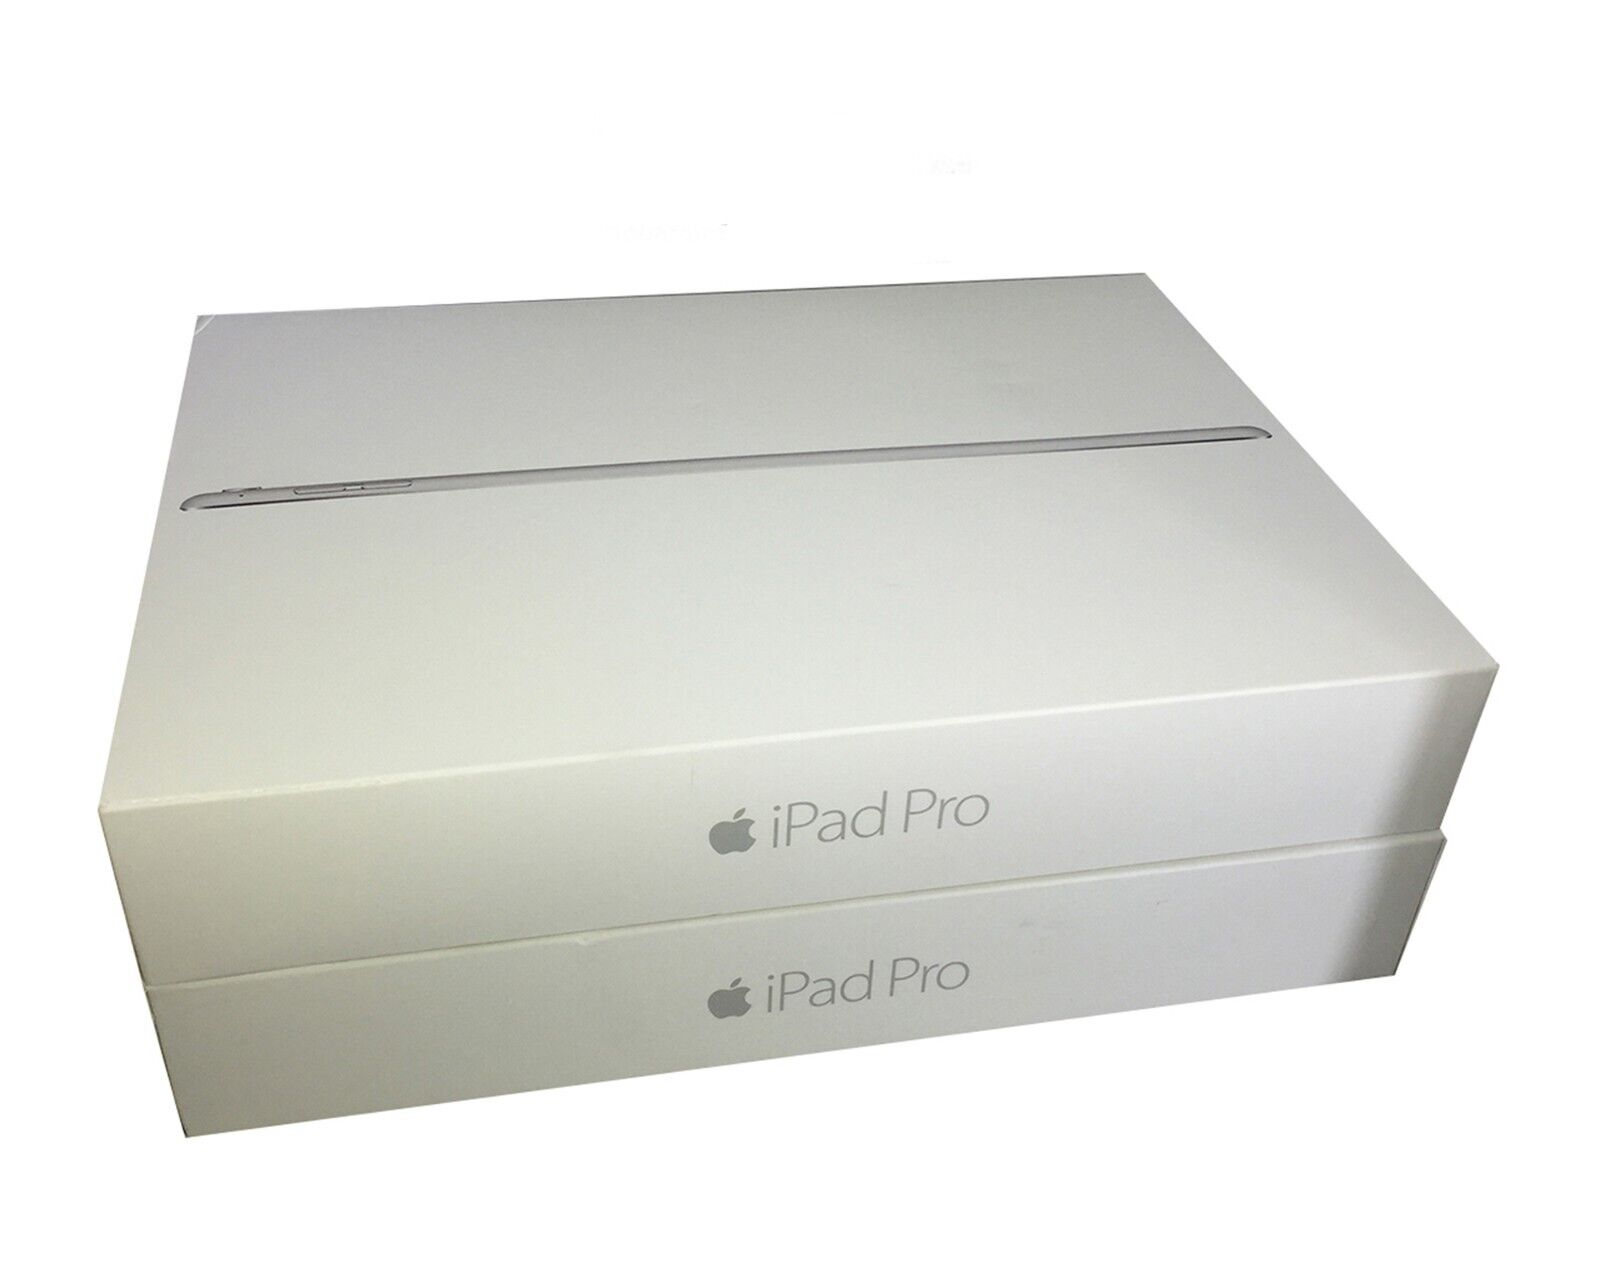 Plus Original Box - Apple iPad Pro, 128GB, Silver, Wi-Fi +4G Unlocked, 12.9-inch